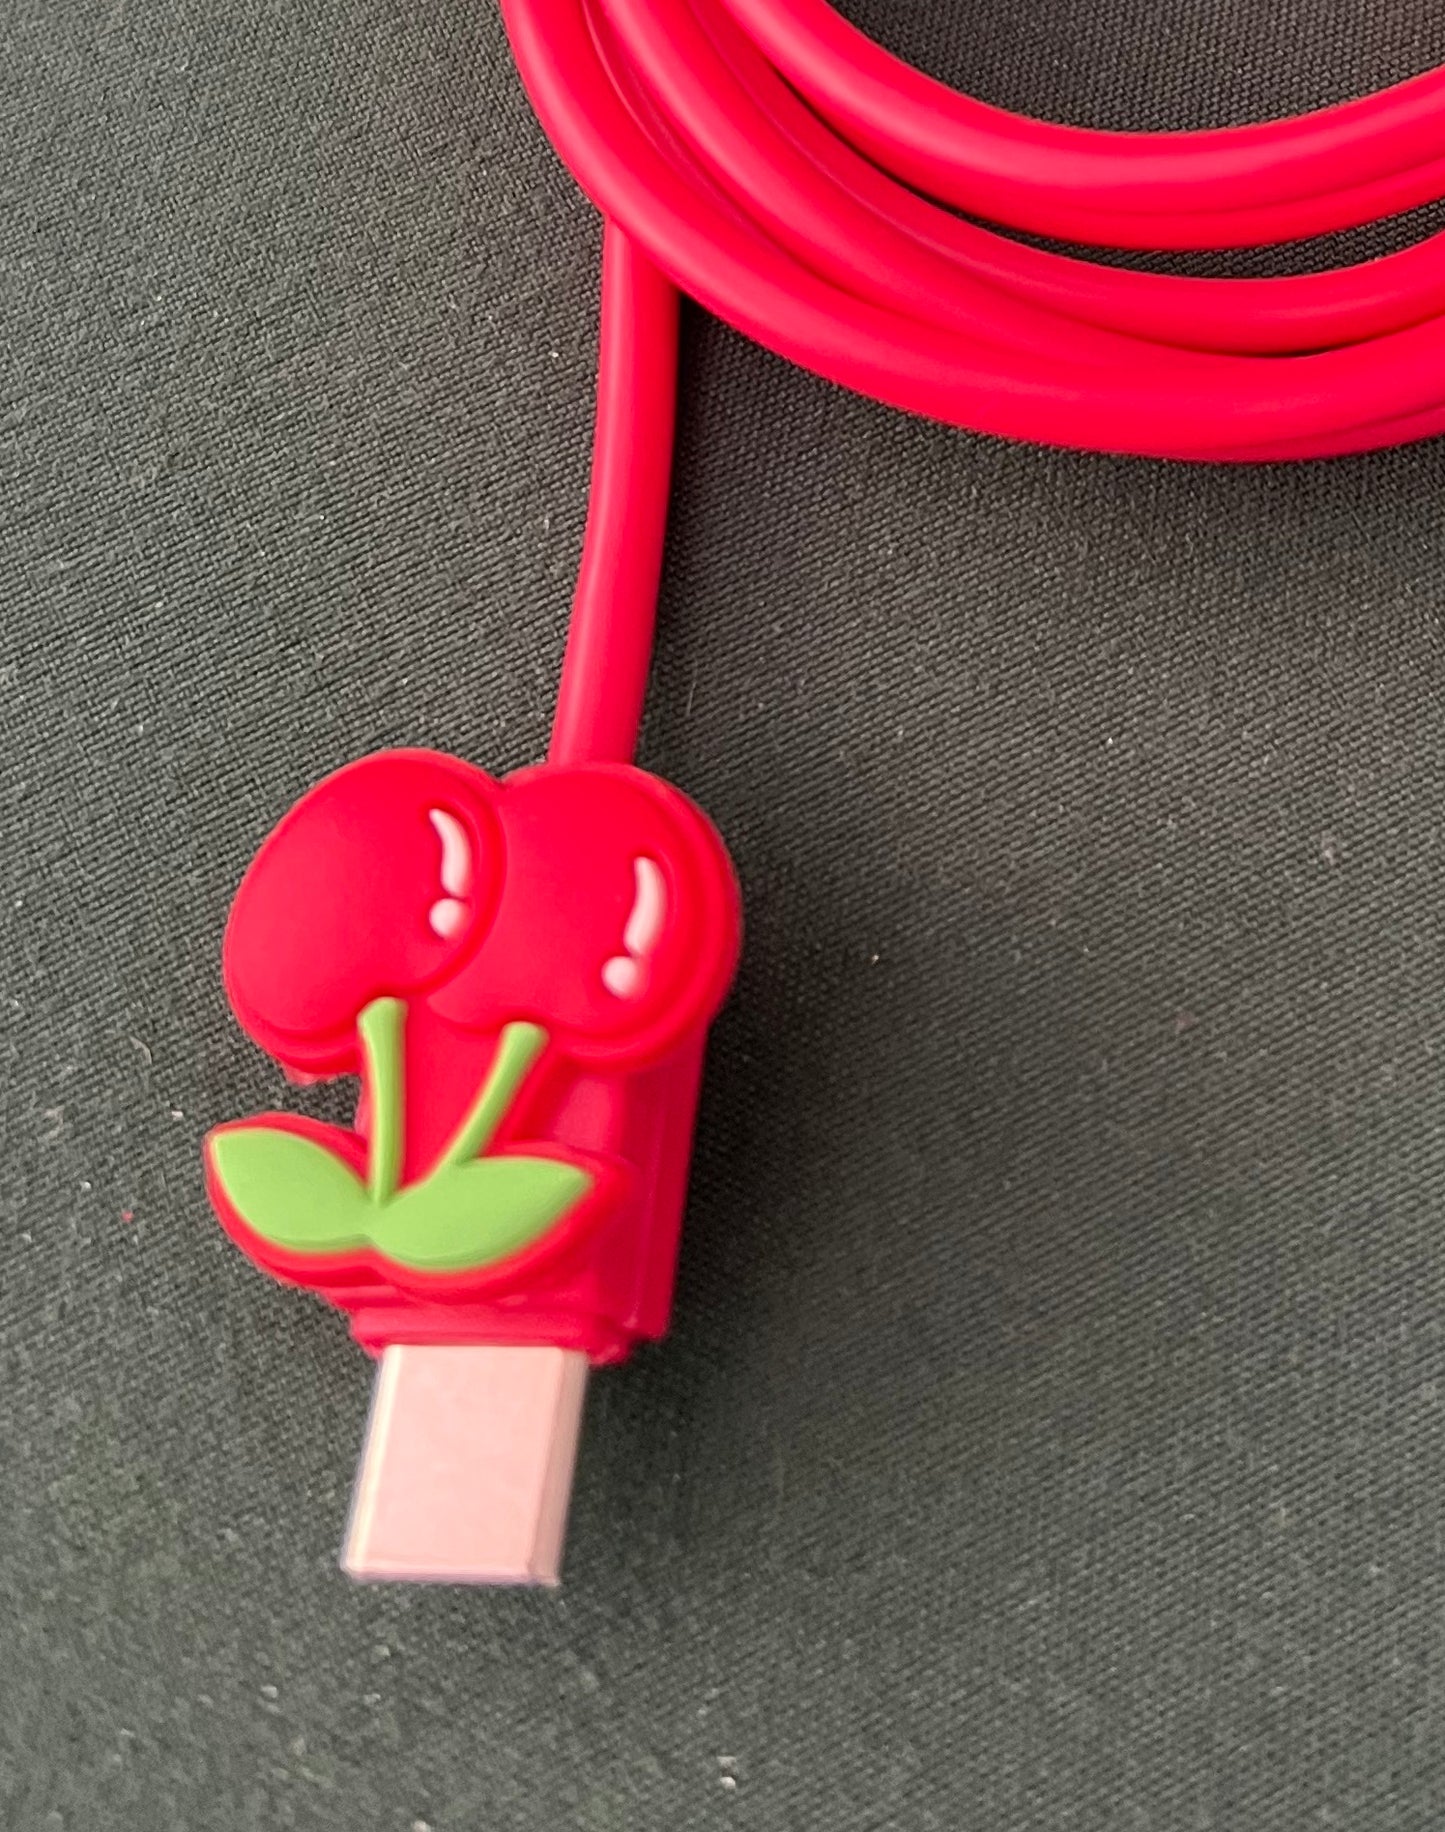 Cherry Micro USB Cable